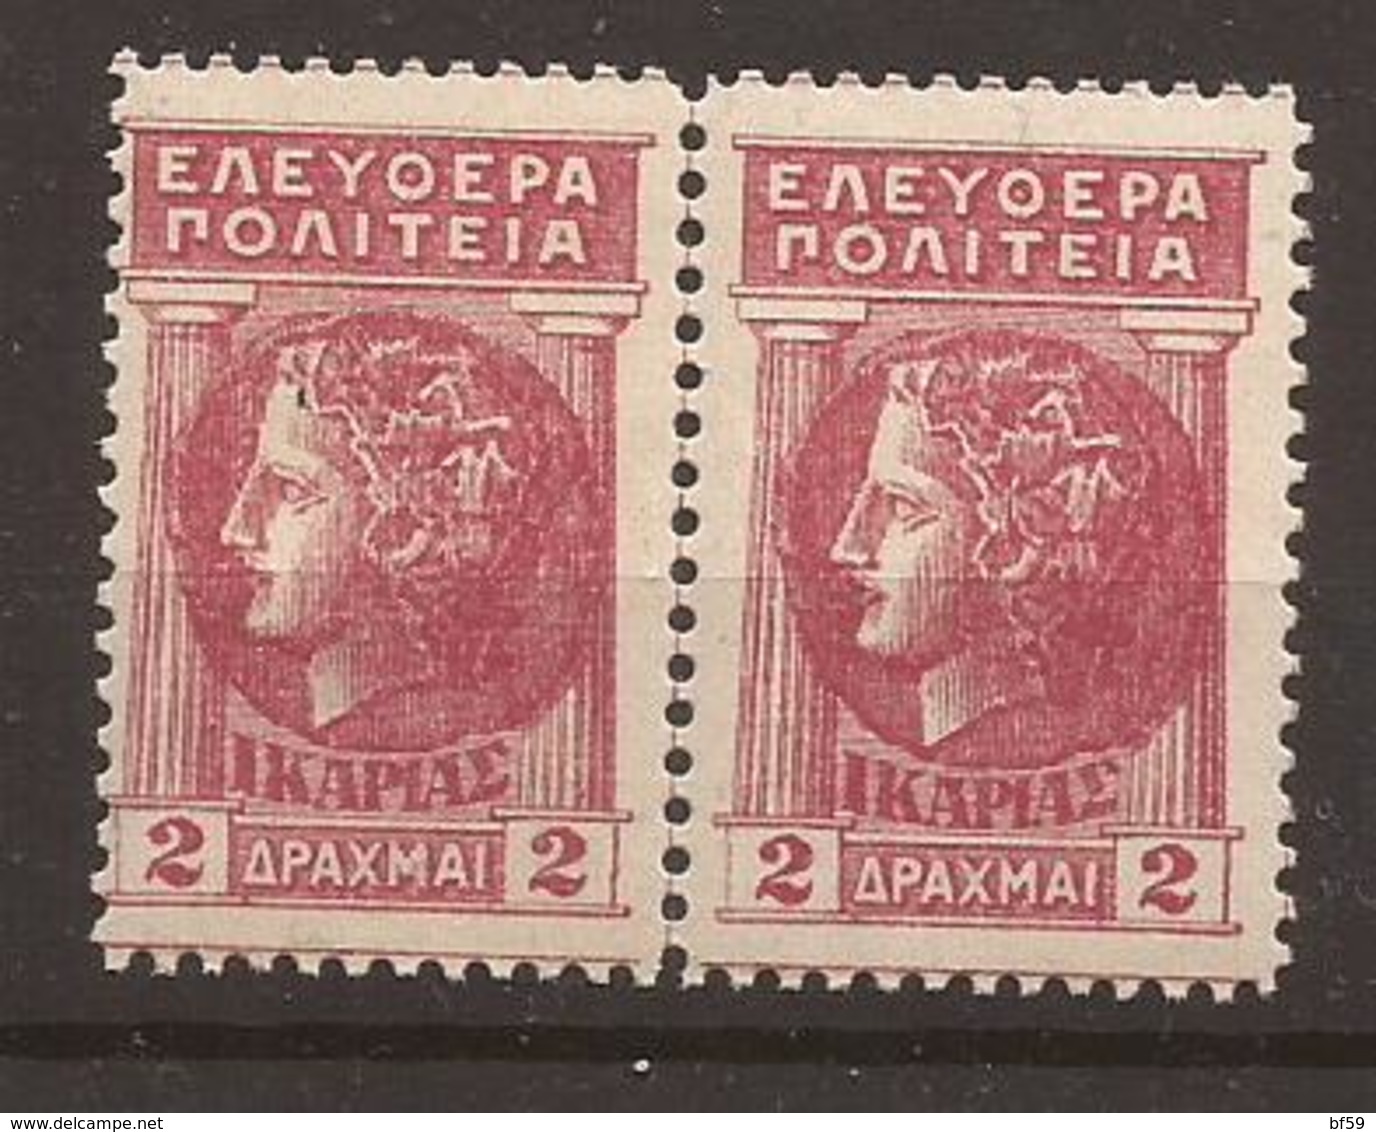 GRECE 1912 IKARIA / ICARIE Hellas#7 YVERT N° 7 "Free State" 2 Drachmai Paire - NEUF XX MNH - Karia